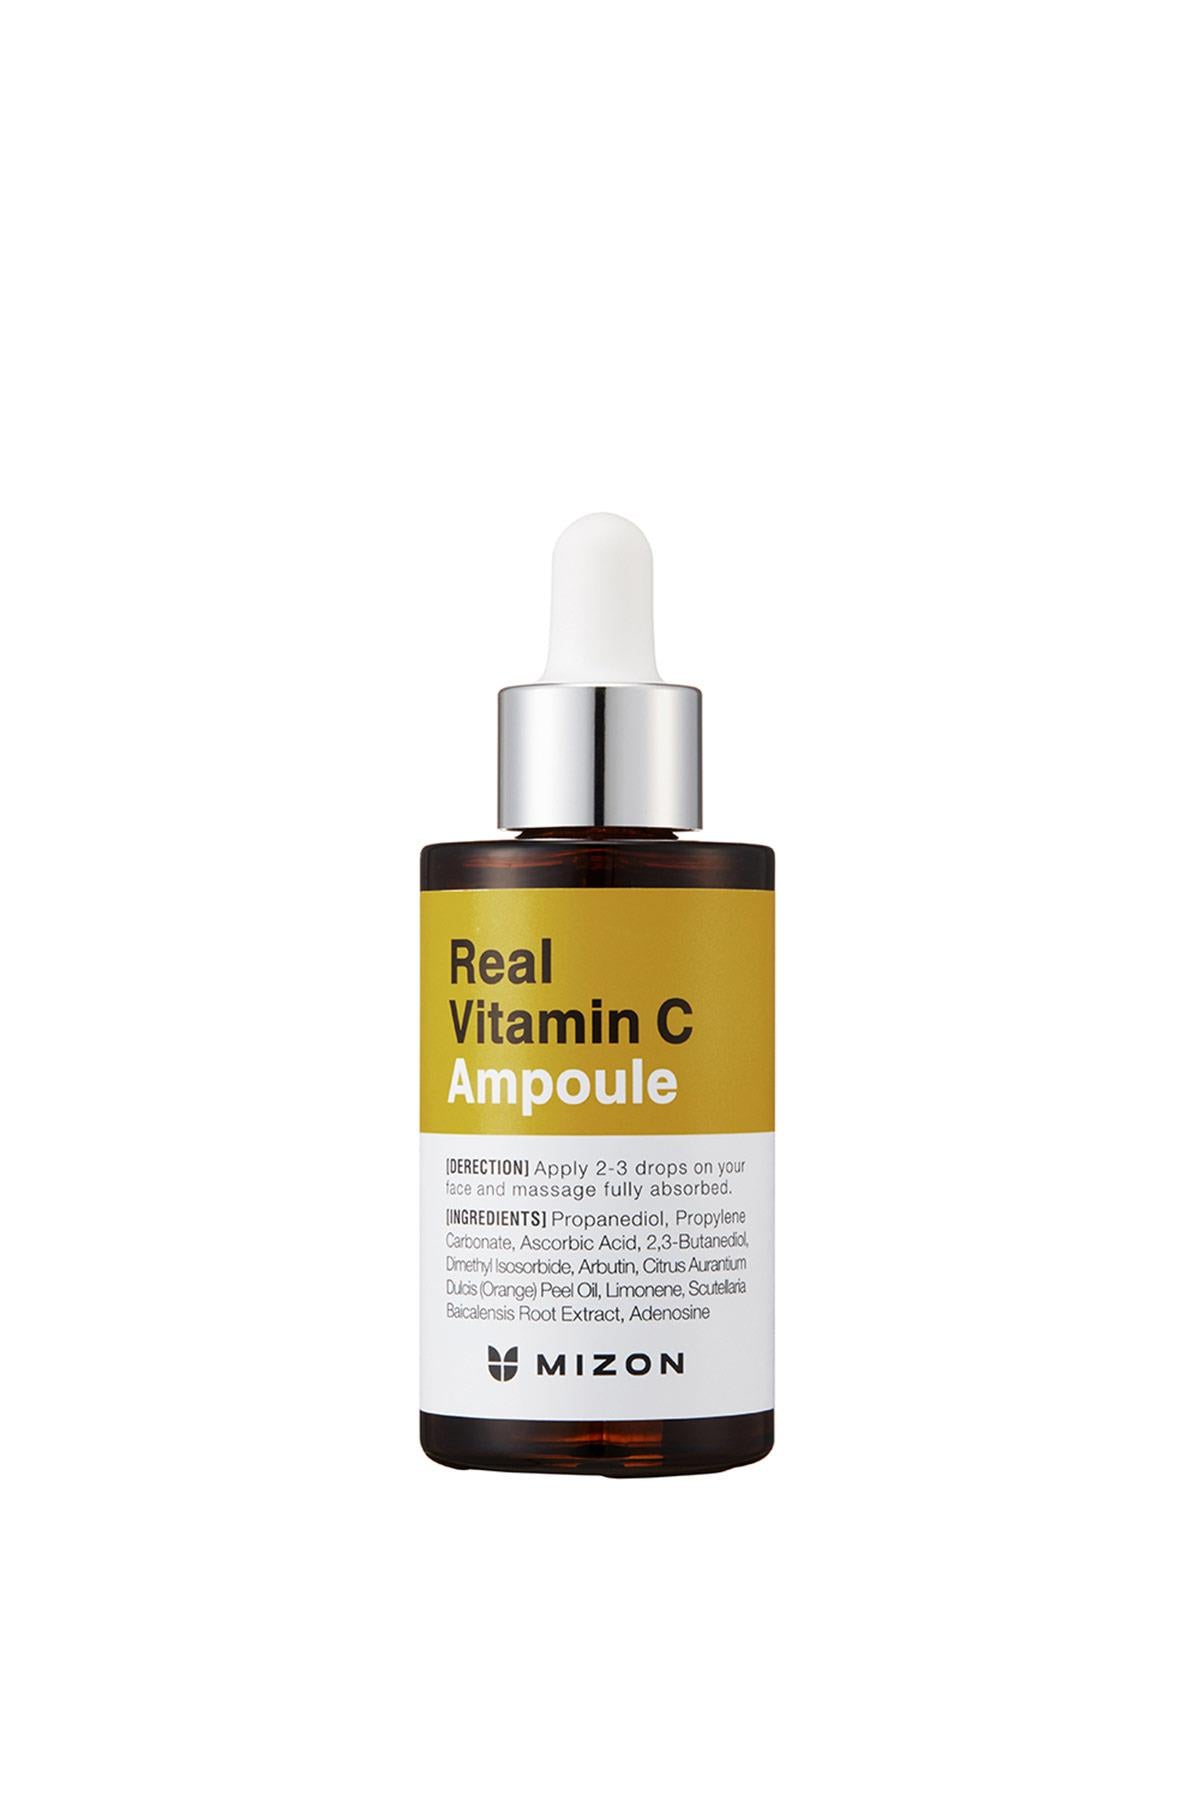 Mizon Real Vitamin C Ampoule – Gerçek Saf C Vitamini Ampulü